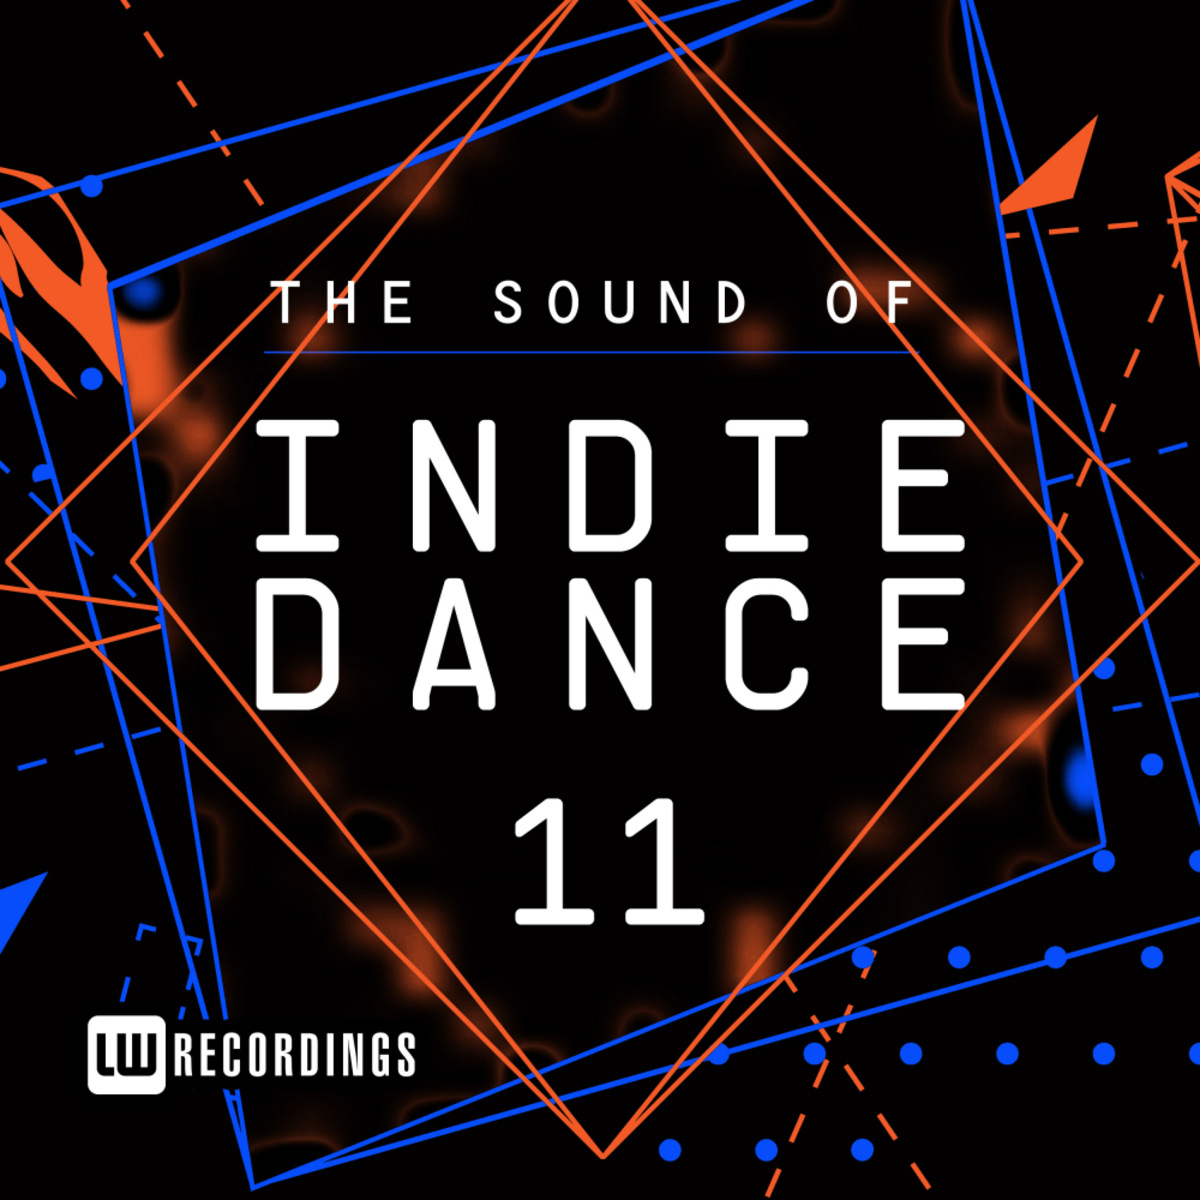 VA - The Sound Of Indie Dance, Vol. 11 / LW Recordings